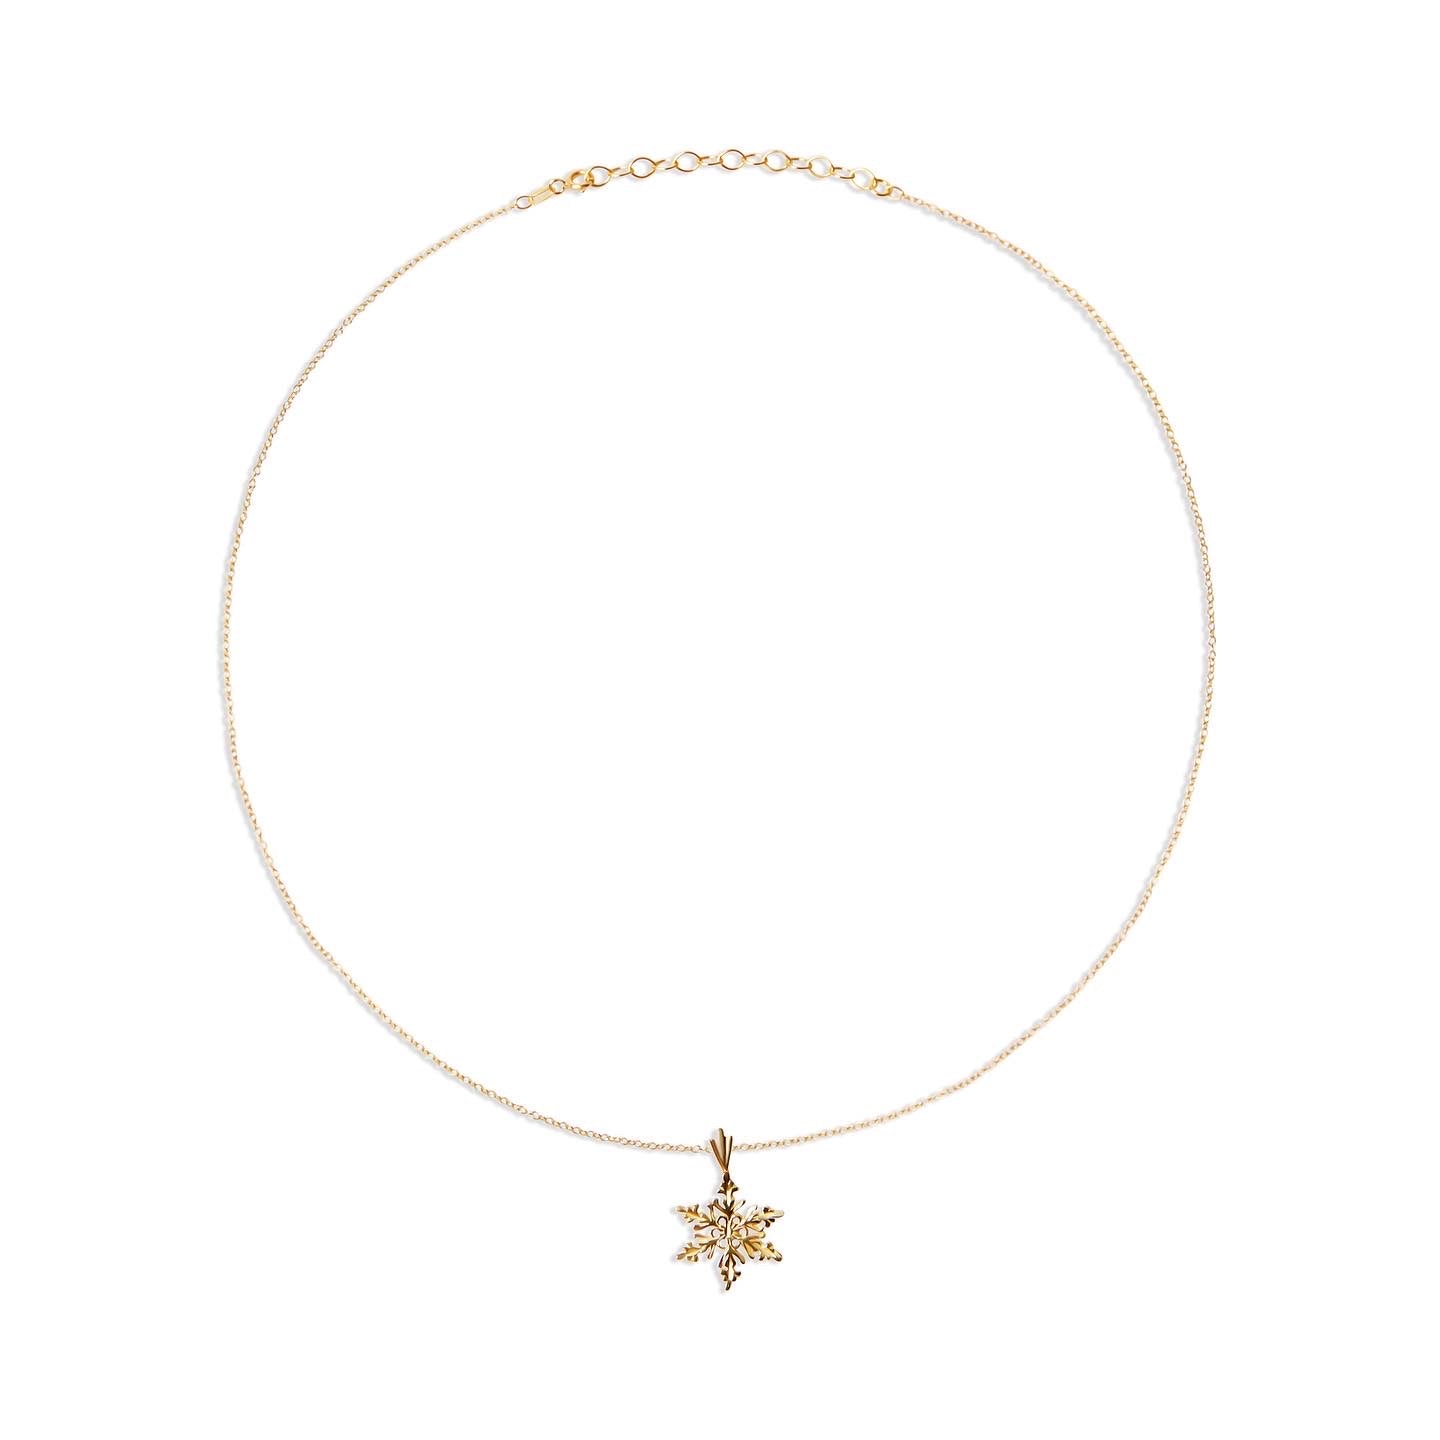 Soho Ski Club X The M Jewelers Snowflake Necklace